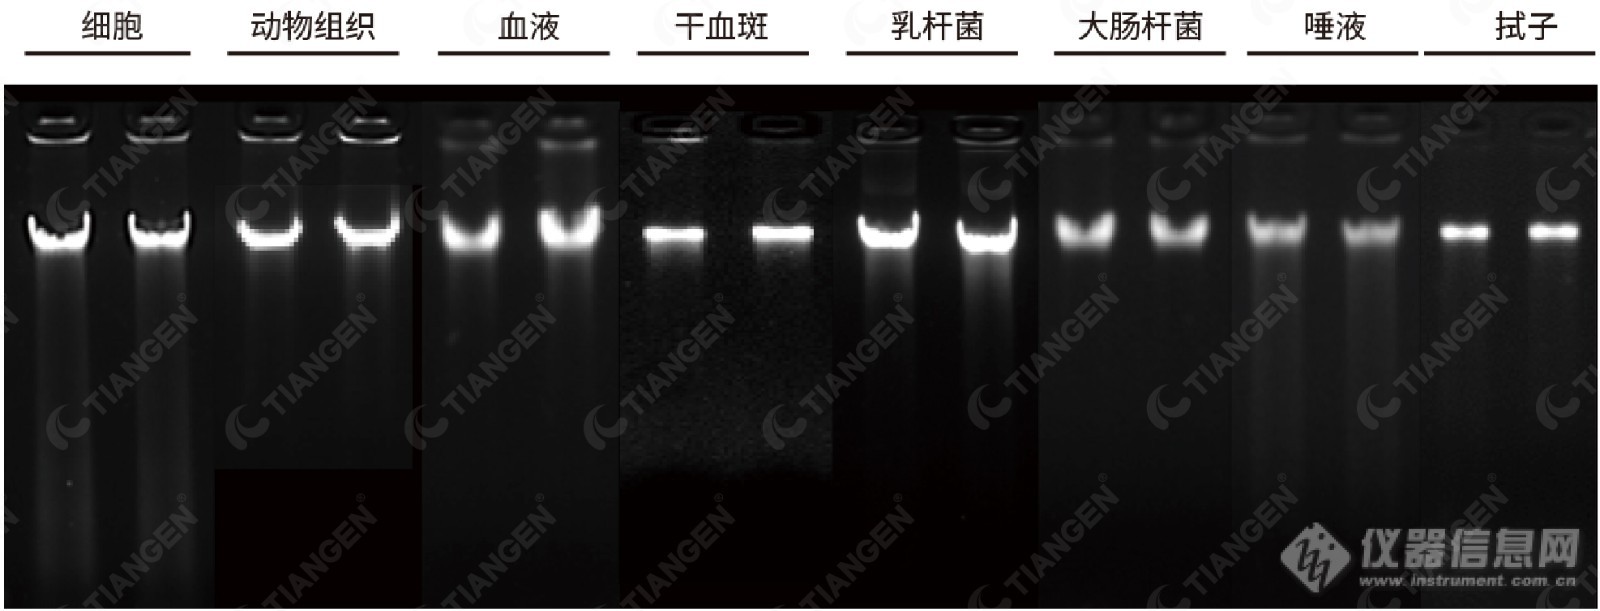 S16推送-3 DNA.jpg